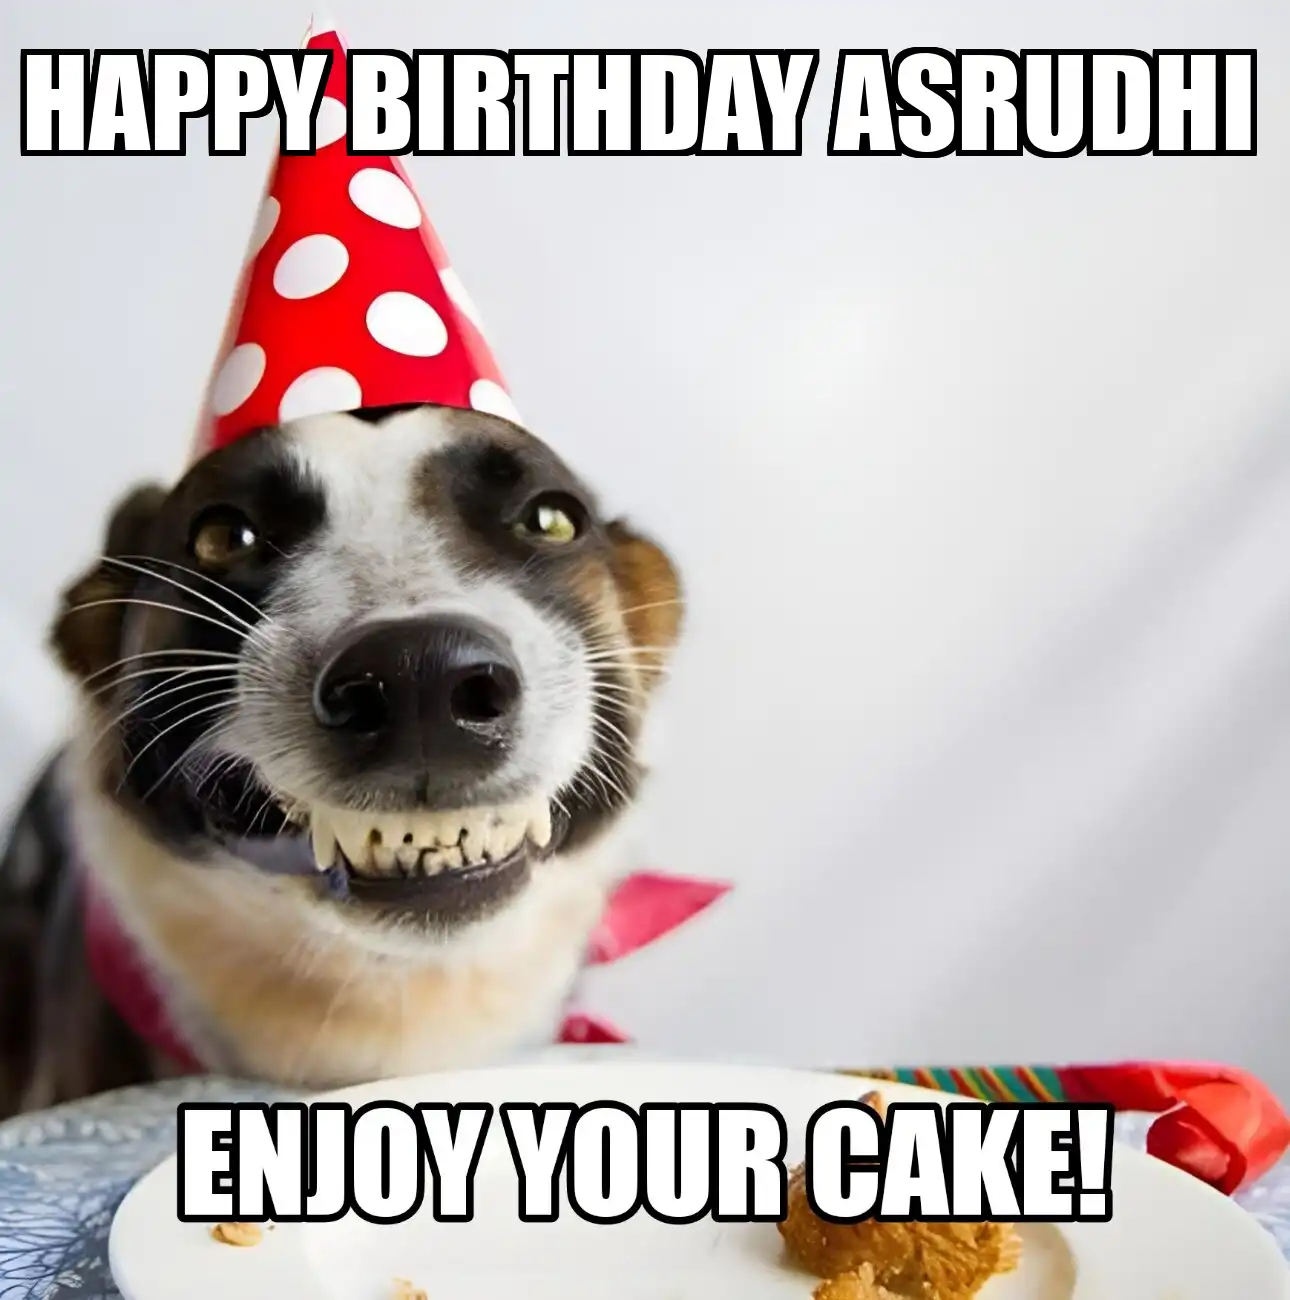 Happy Birthday Asrudhi Enjoy Your Cake Dog Meme